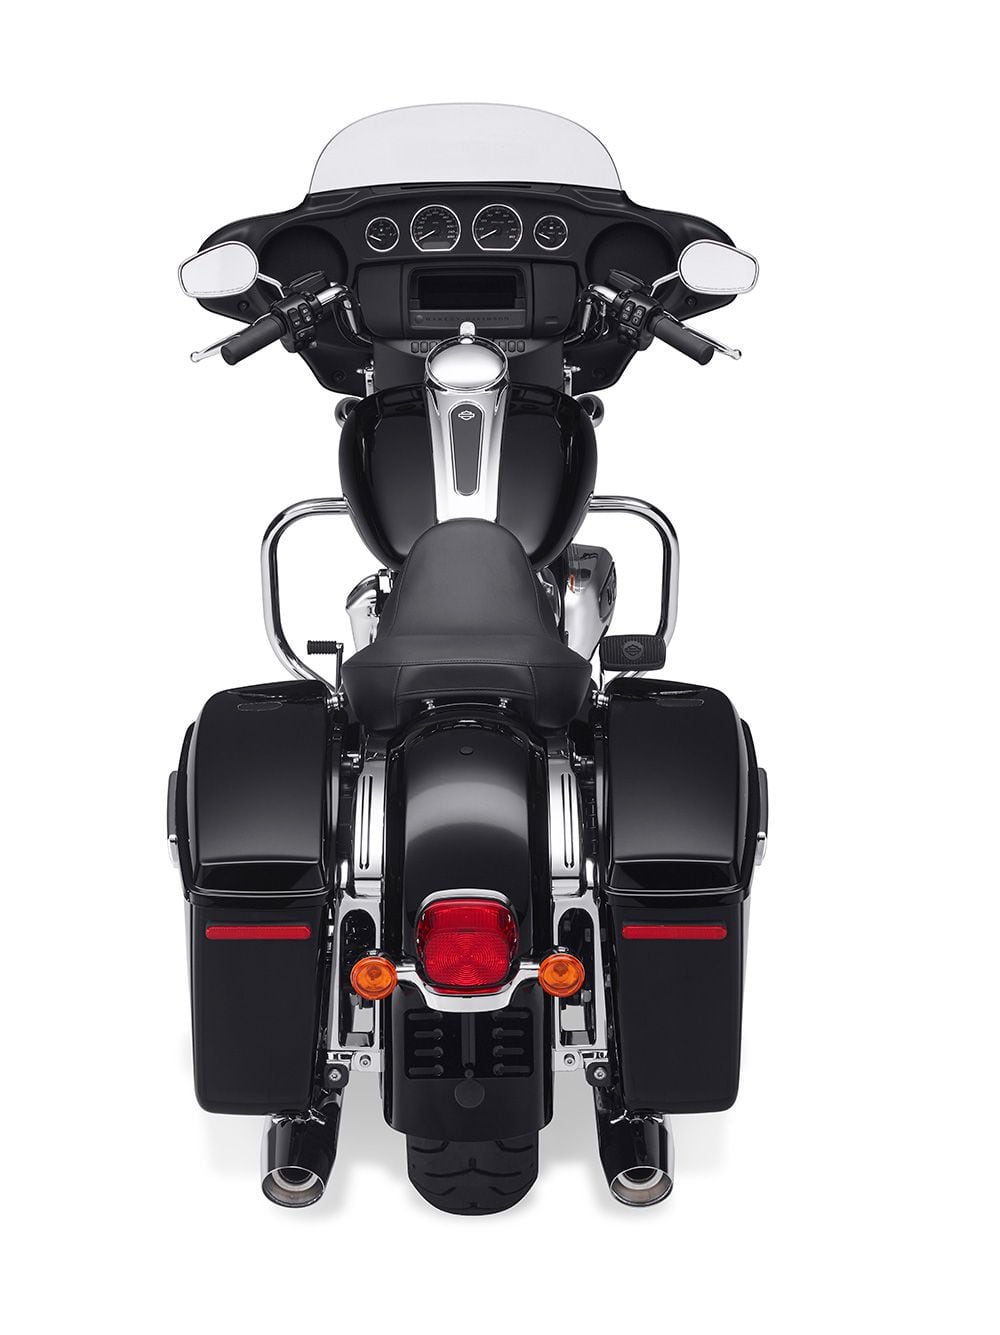 2019 Harley-Davidson FLHT Electra Glide Standard, First Ride Review